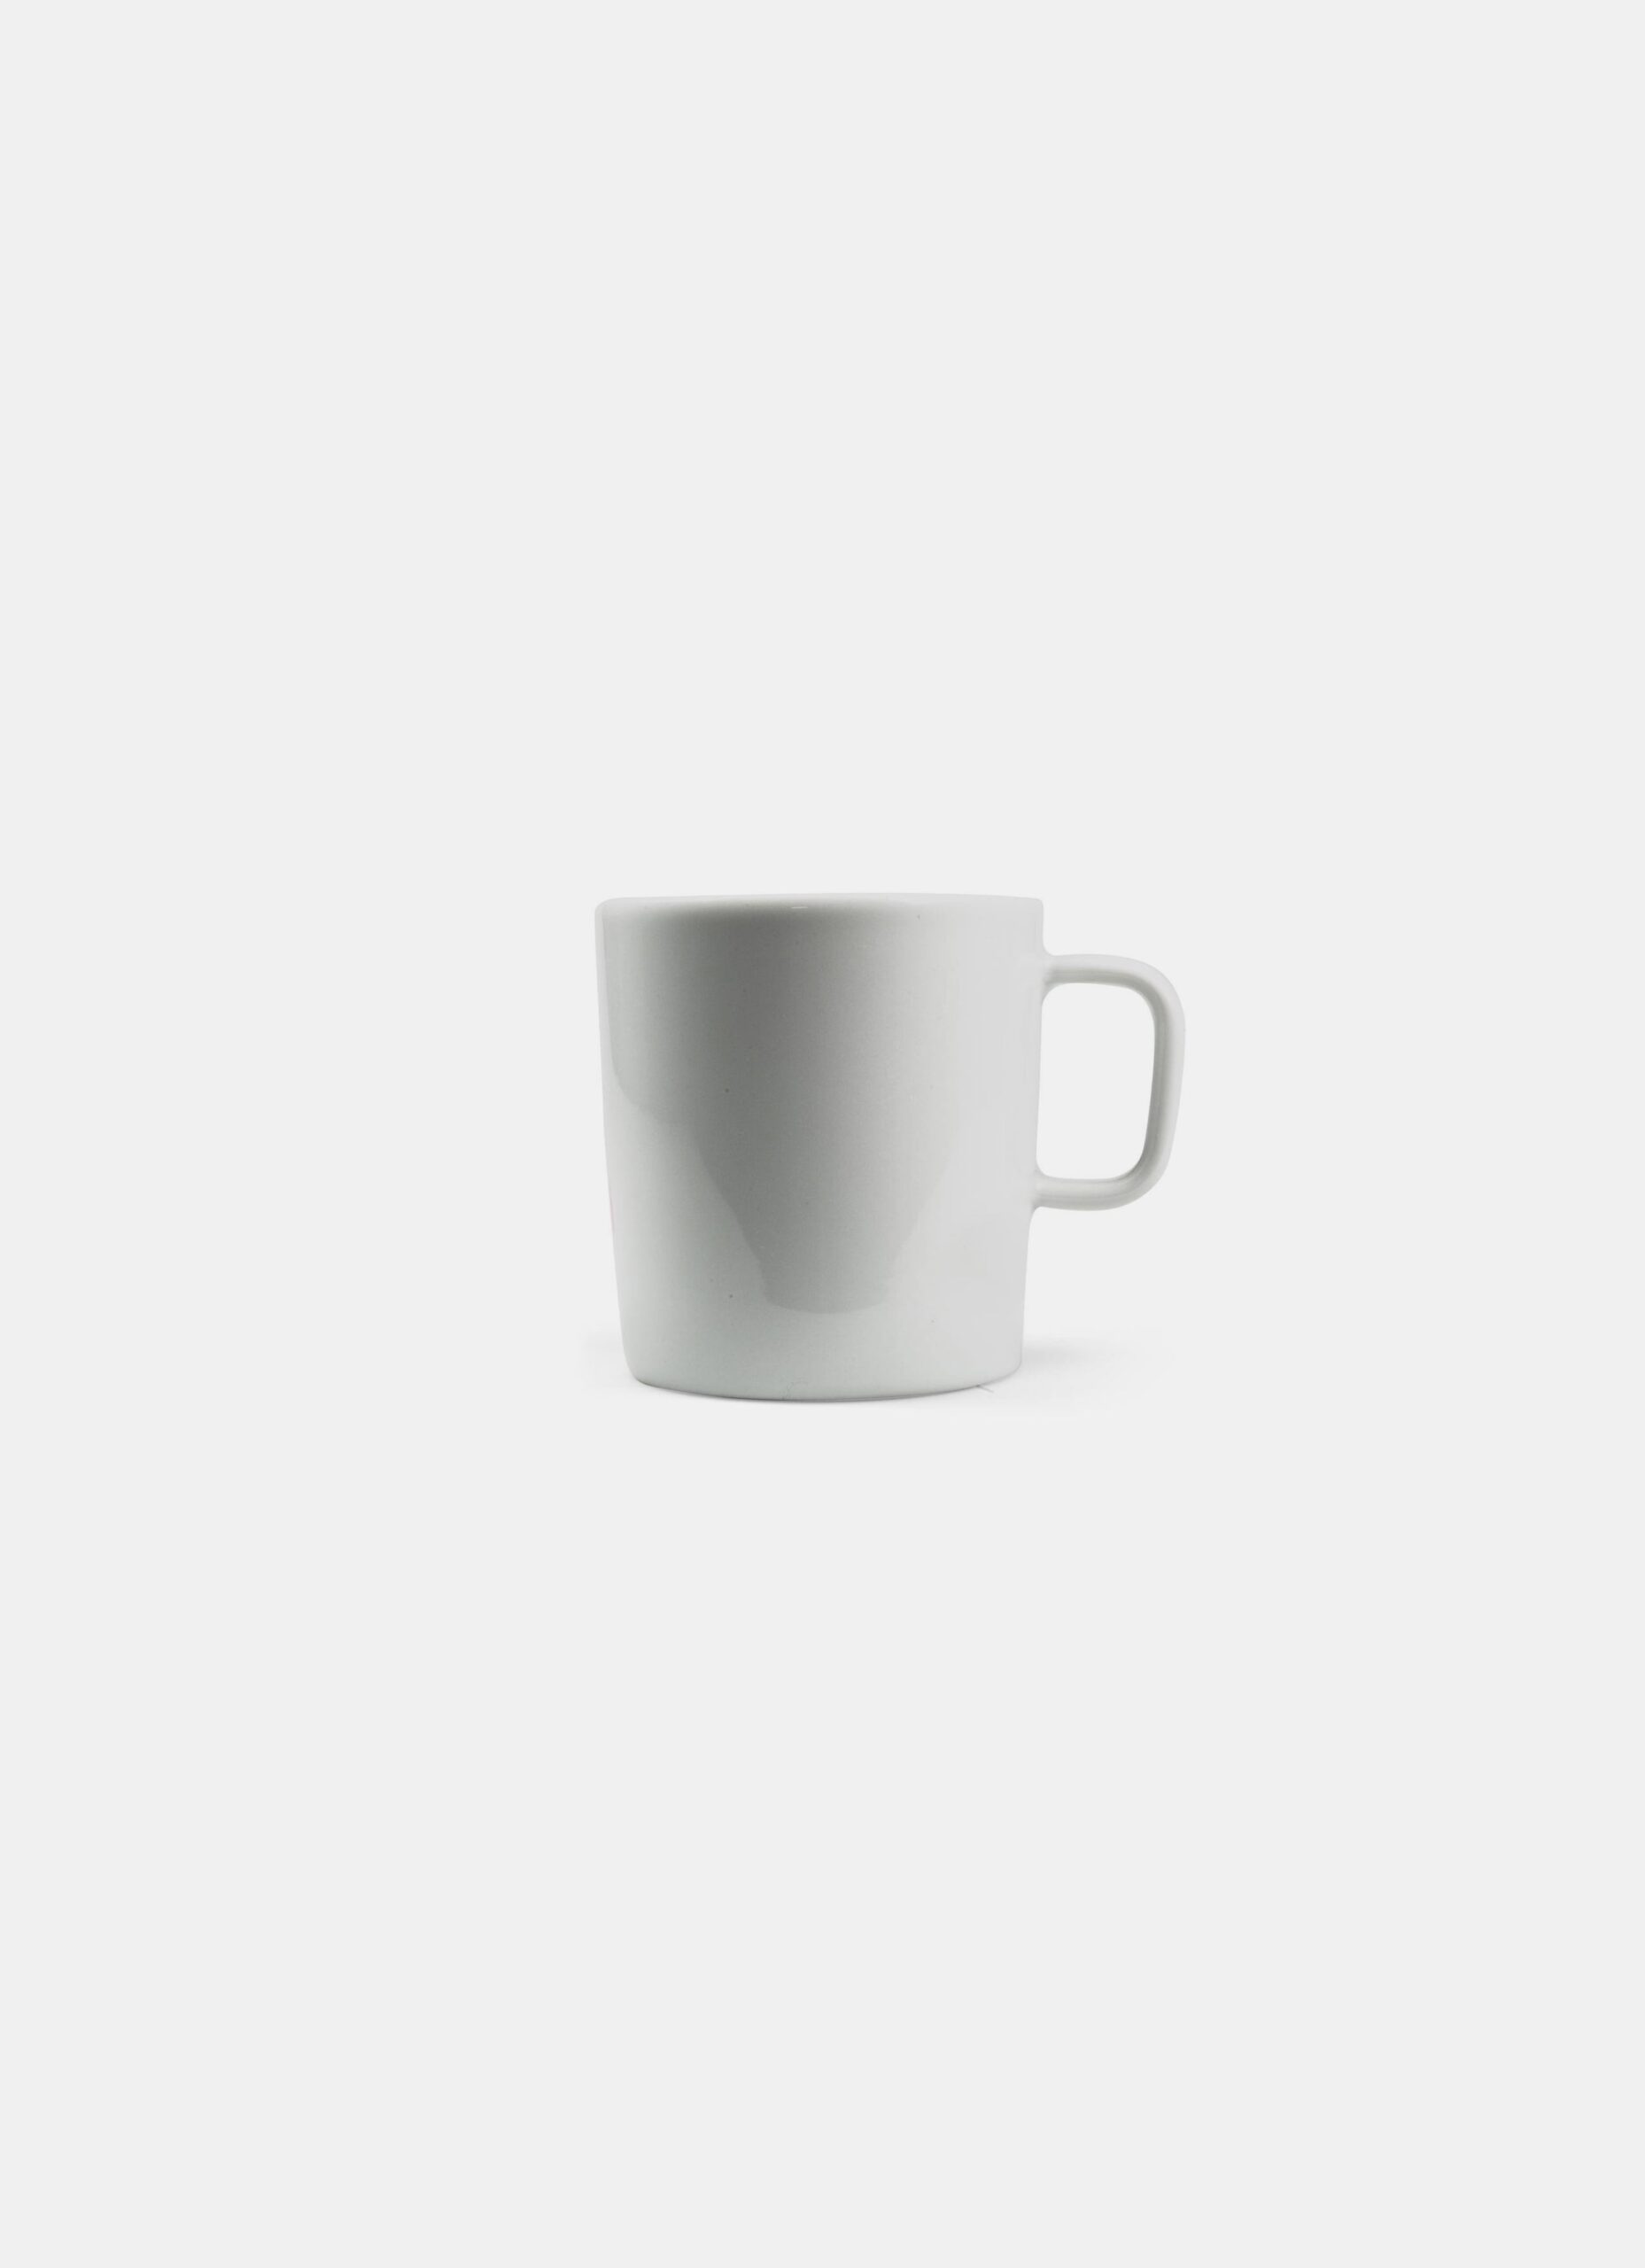 Alessi - Jasper Morrison - Plate Bowl Cup - Mug - White Porcelain